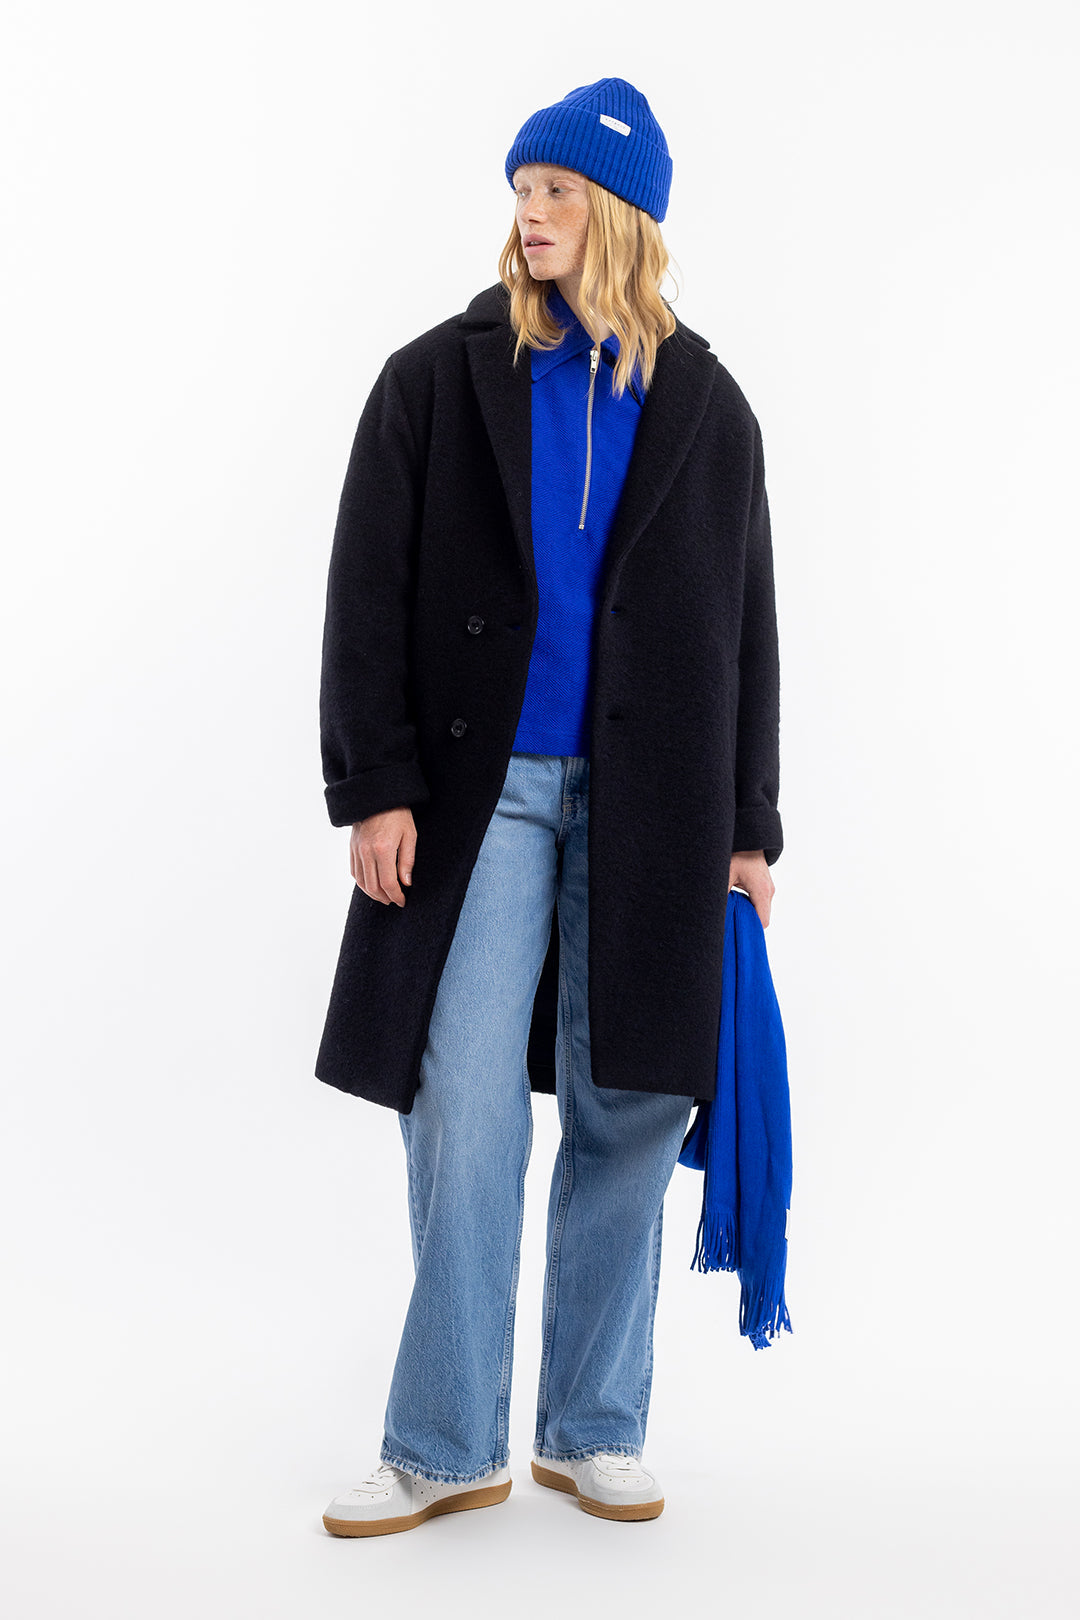 Black organic wool blend coat